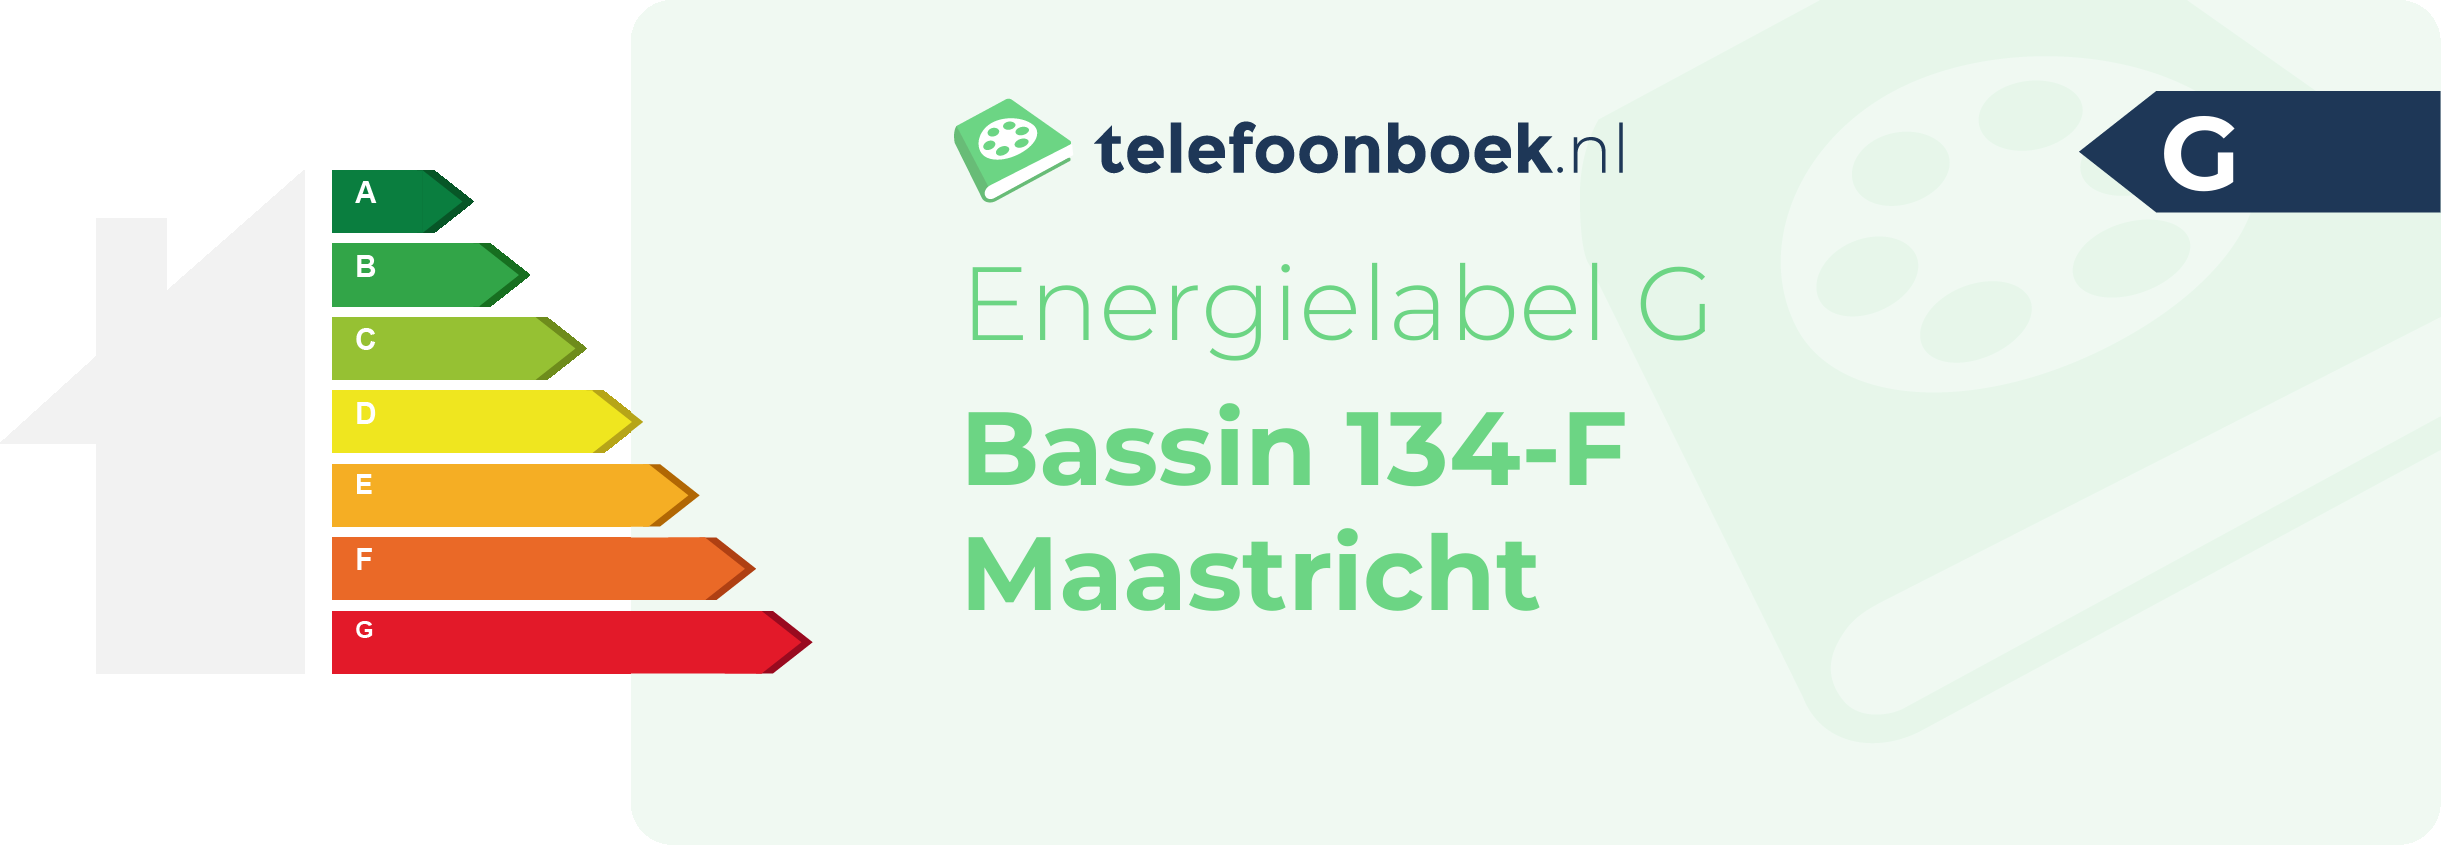 Energielabel Bassin 134-F Maastricht